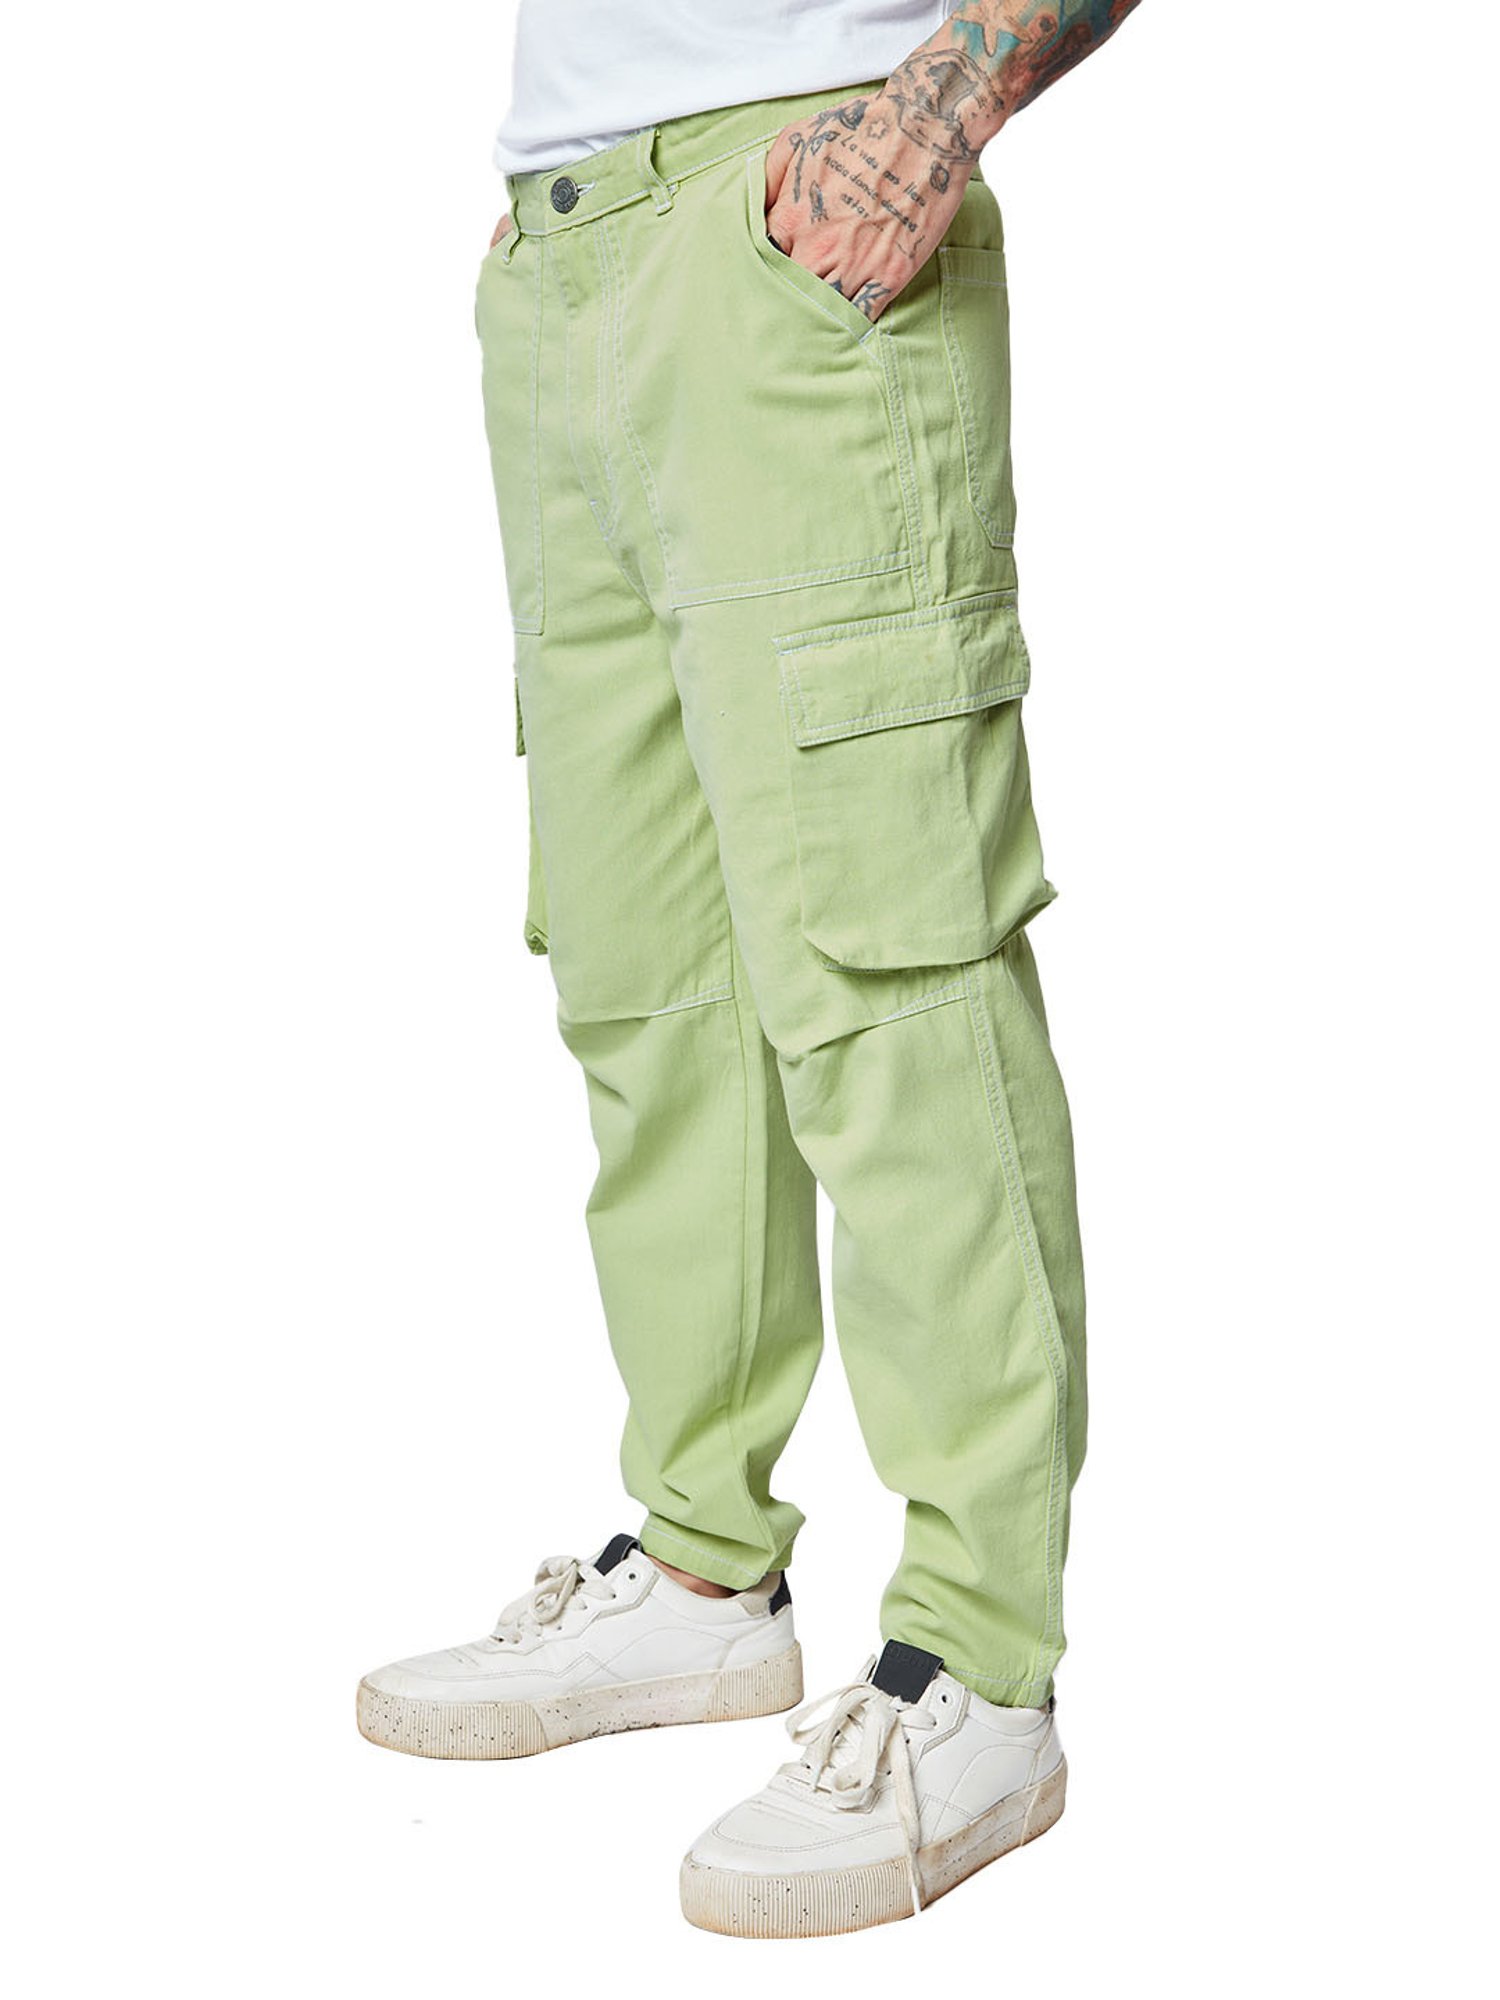 Canvas Cargo Pants - Light khaki green - Ladies | H&M US